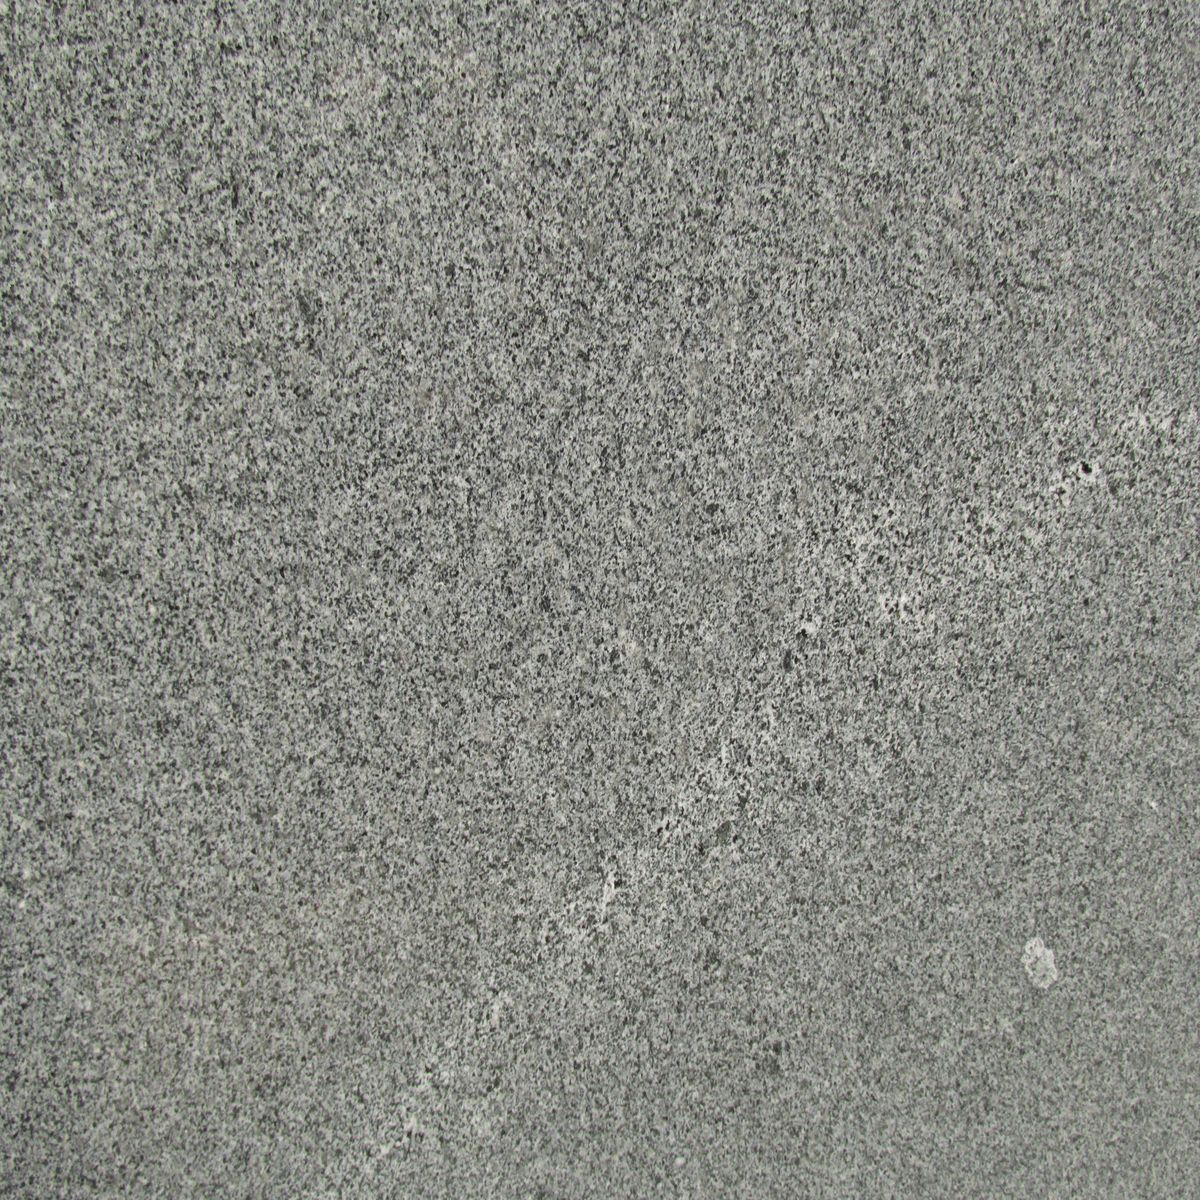 diorite graniti